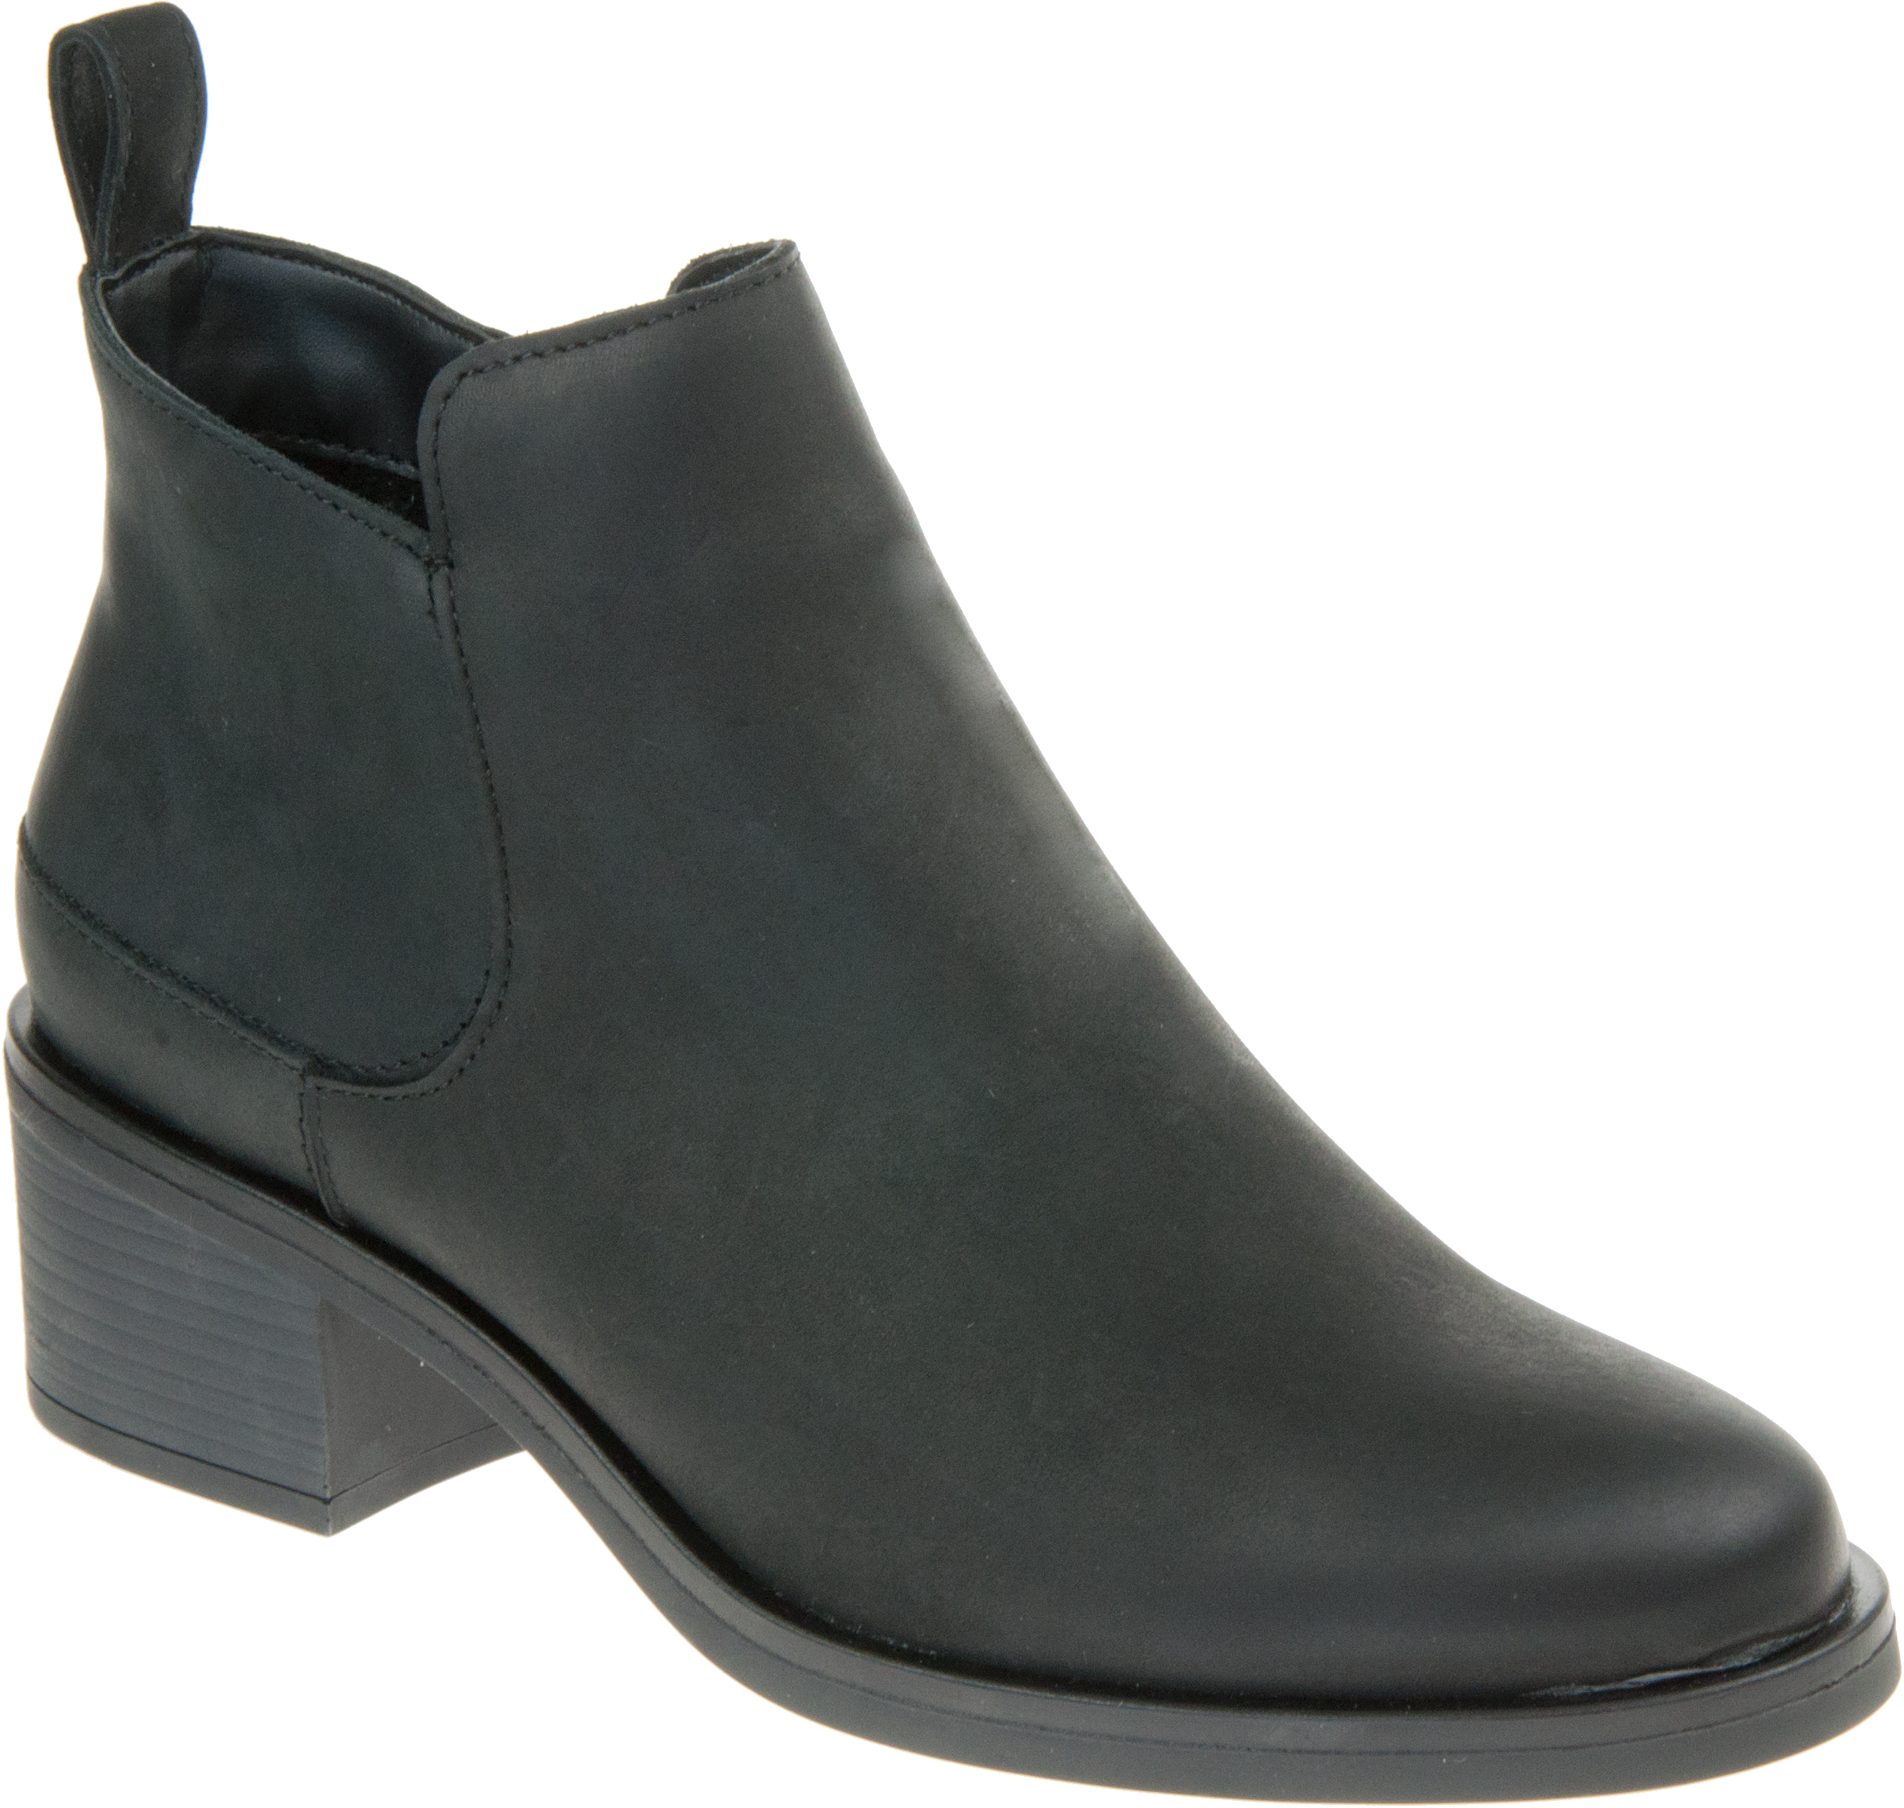 Clarks Memi Zip Black Leather 26161654 - Ankle Boots - Humphries Shoes